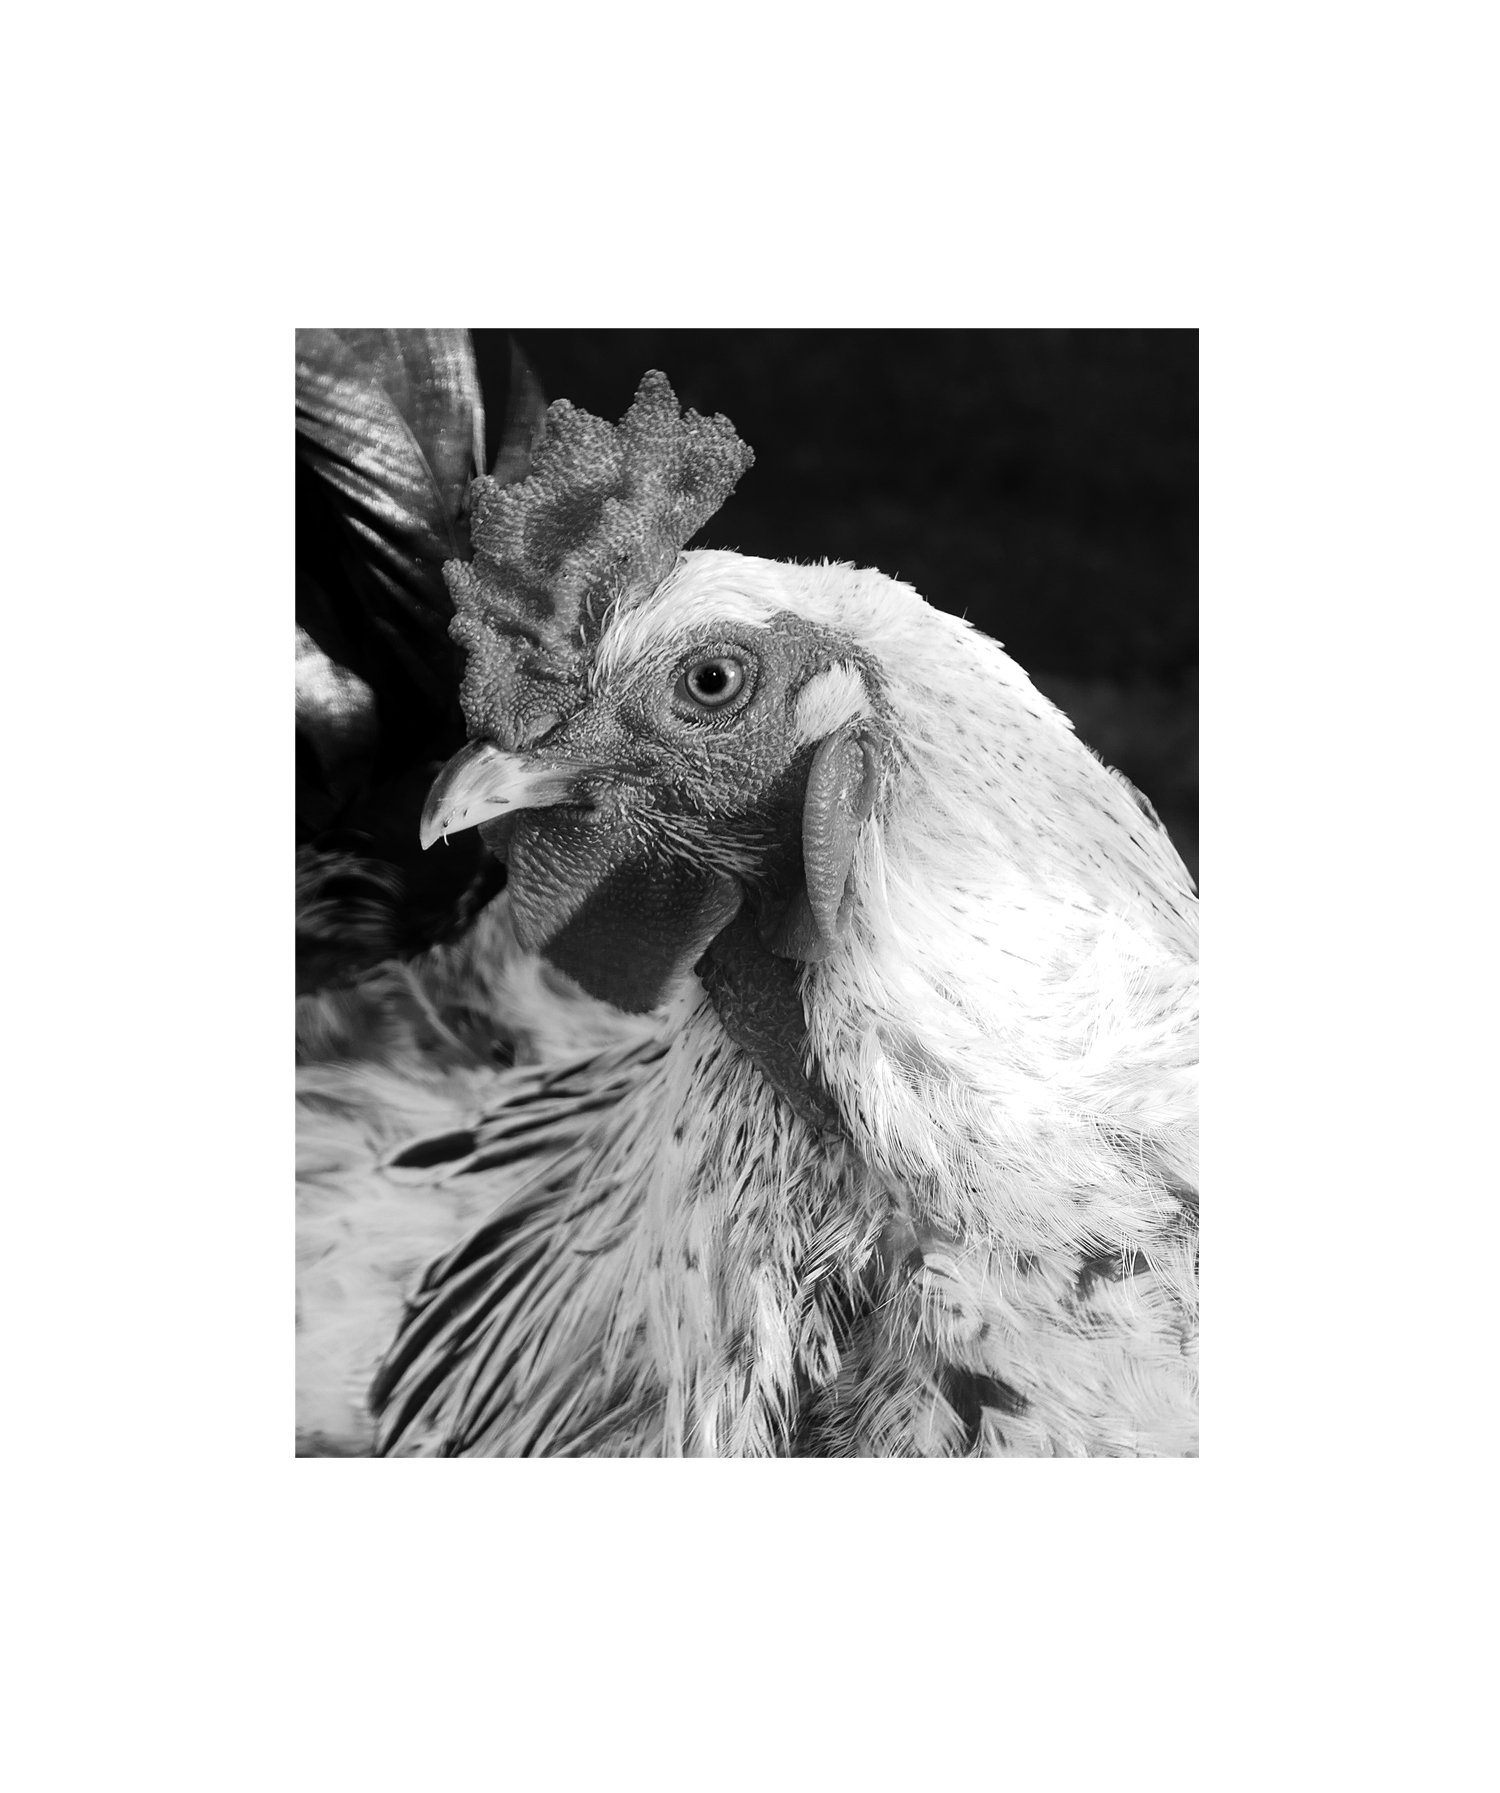 2018-01-25_5a69804d7d0b8_aysia-stieb-foot-tap-jaw-jerk-chicken-rooster-04